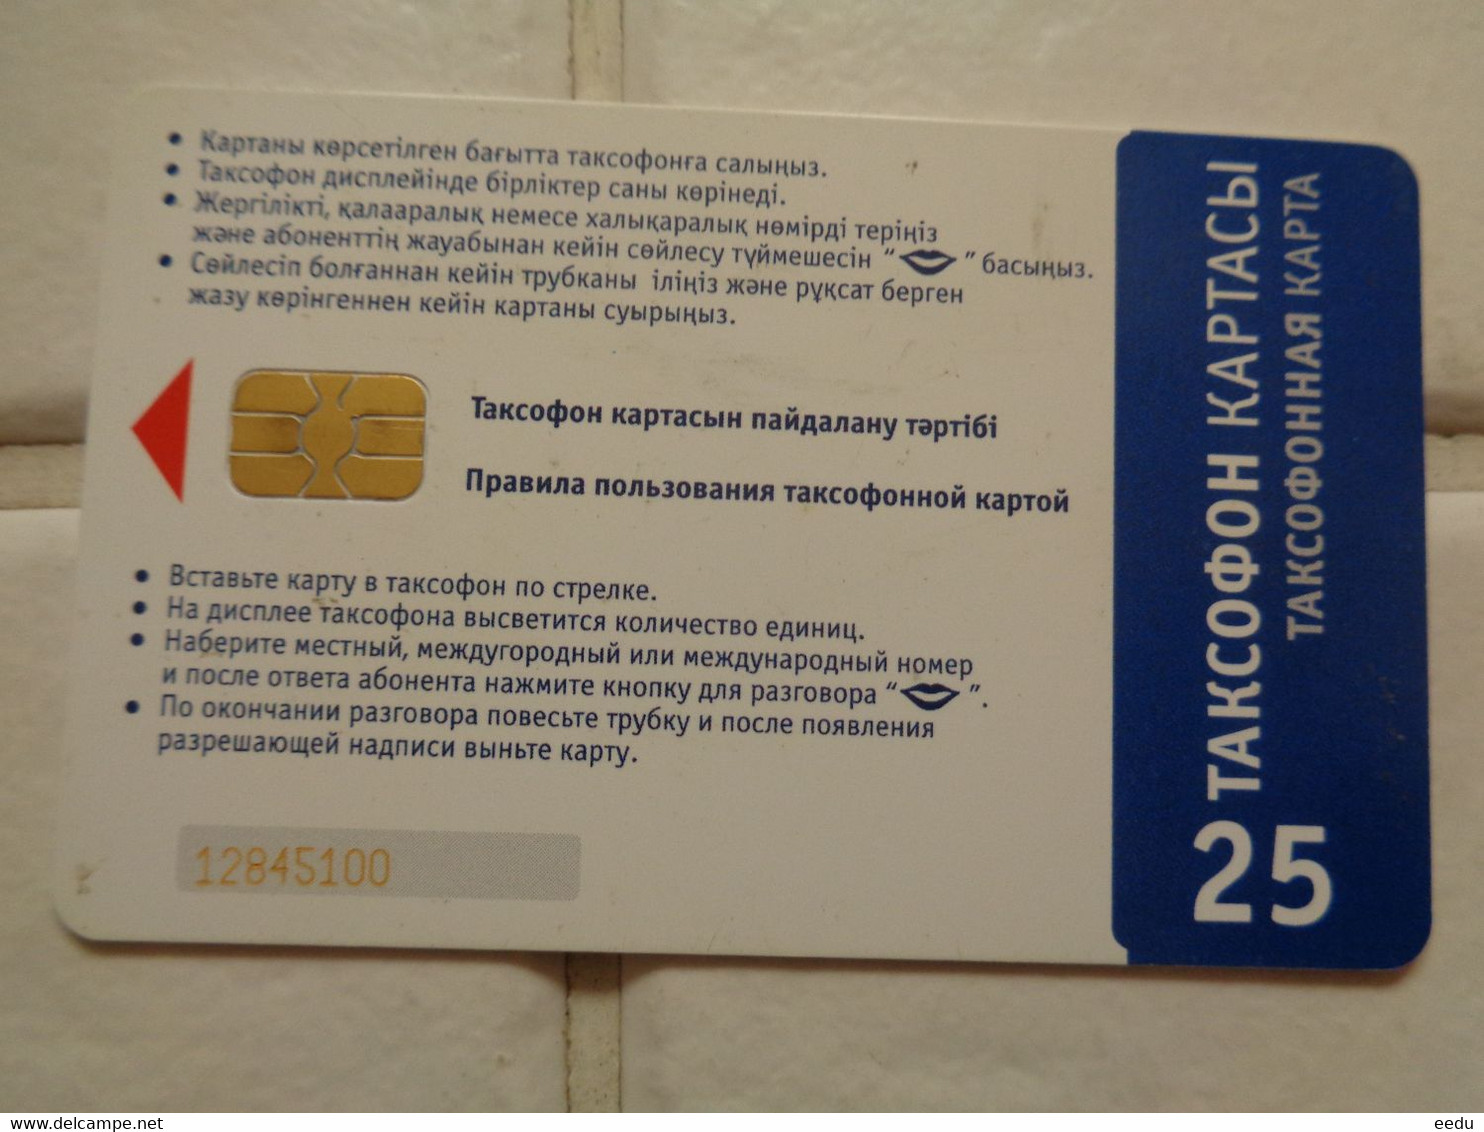 Kazakhstan Phonecard - Kazakhstan